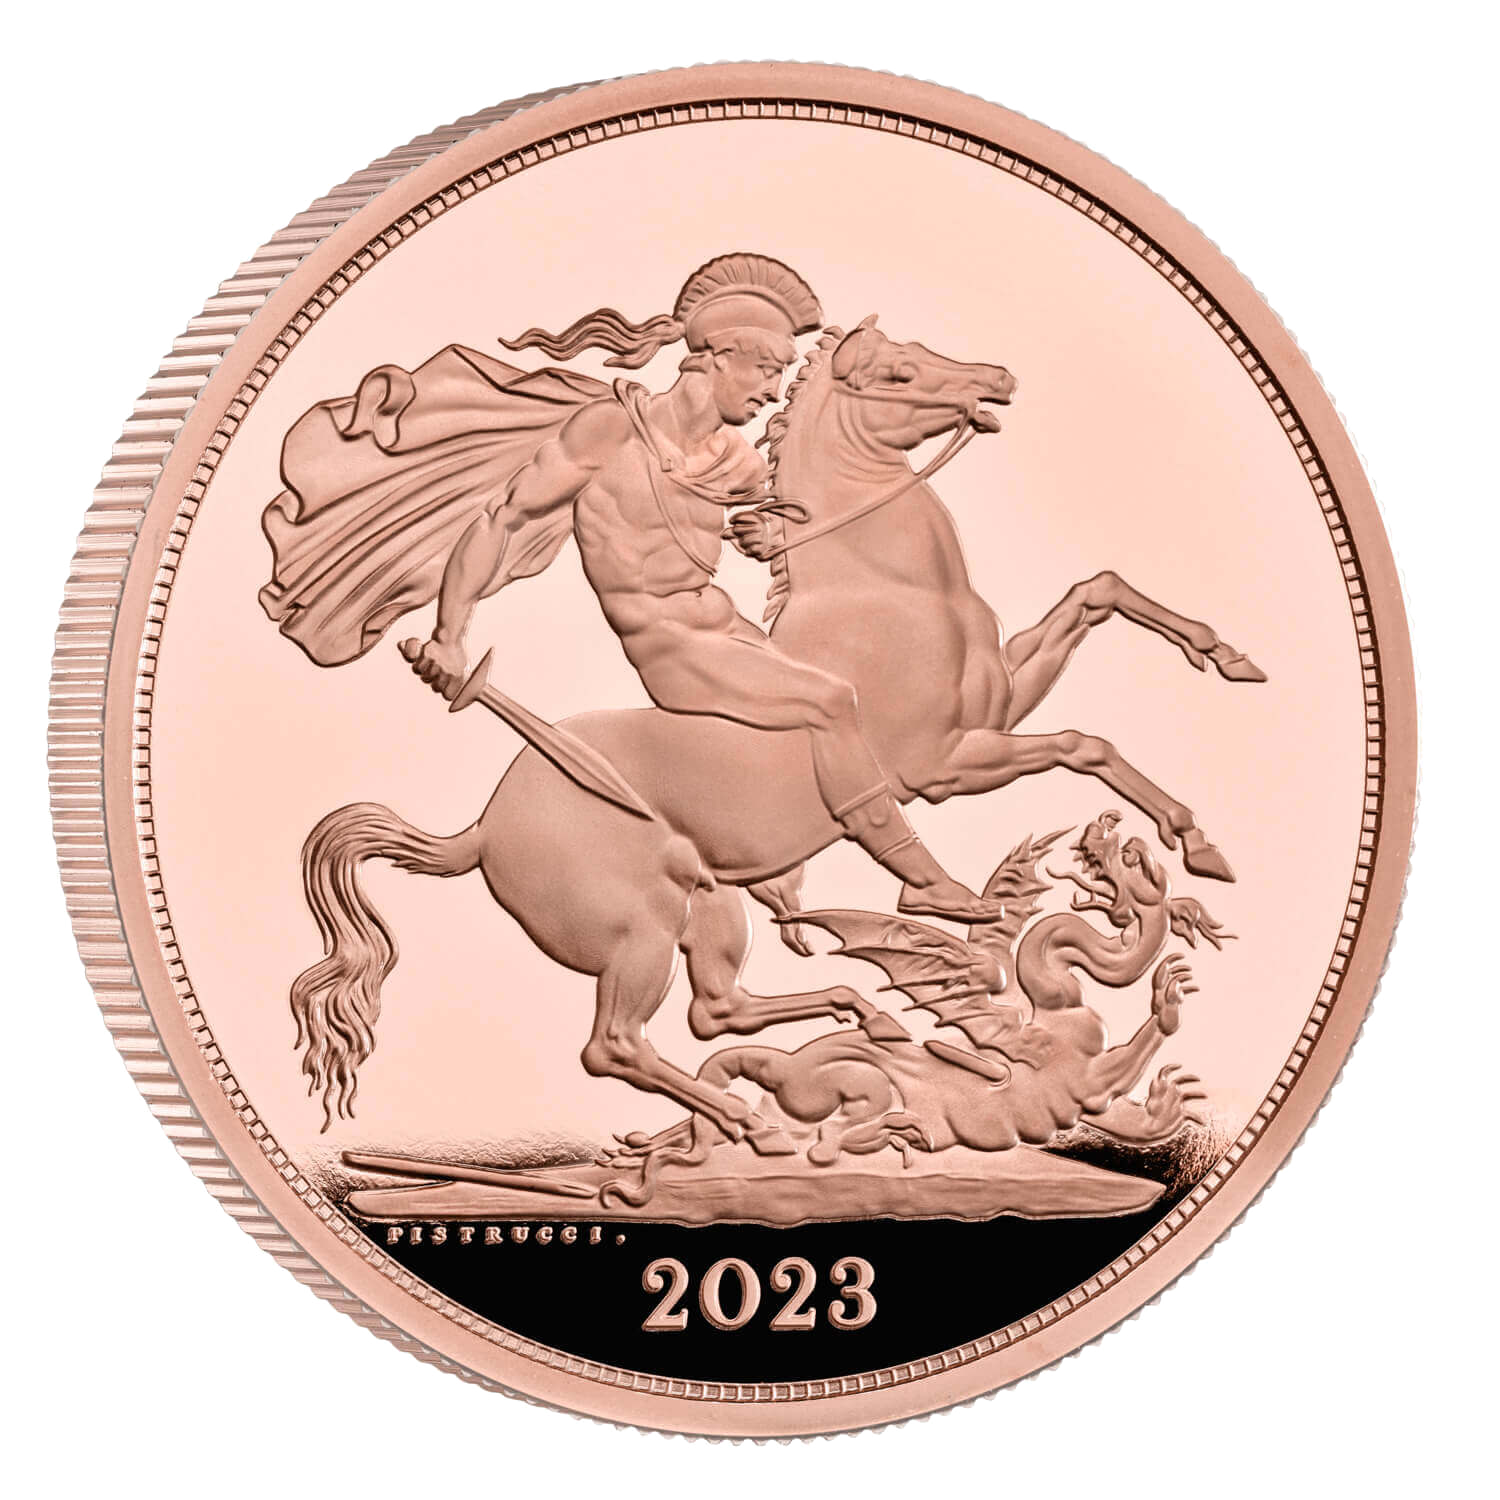 2023 British Gold Sovereign 5-Piece Set - King Charles III Coronation